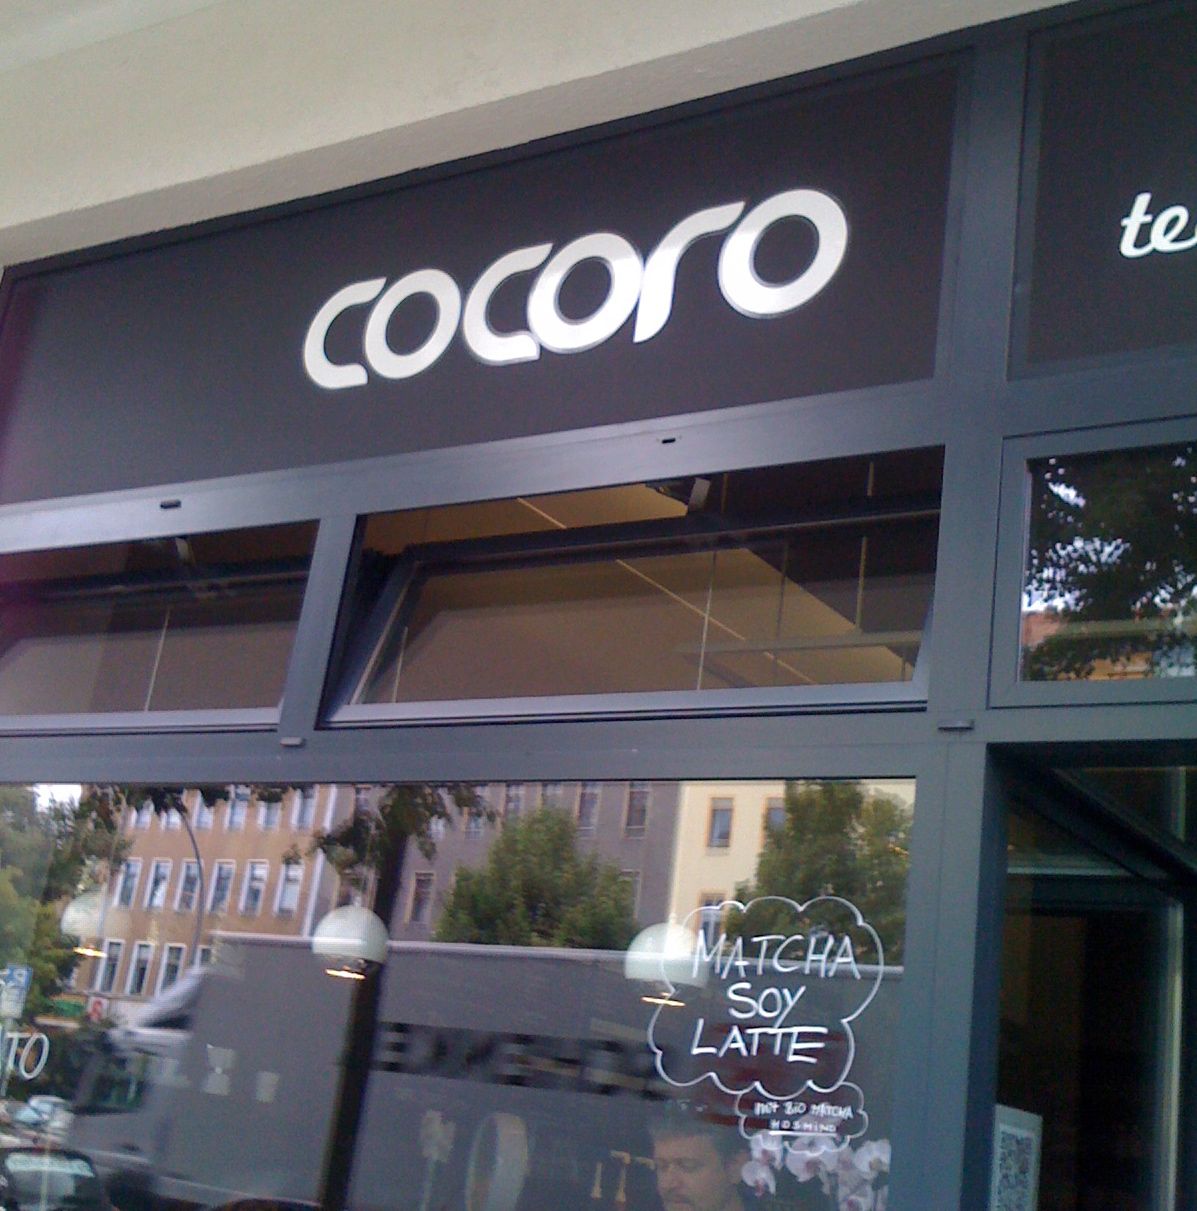 <!--:en-->‘Cocoro’ The New Teahouse Cafe  in Berlin’s Kreuzberg District<!--:-->